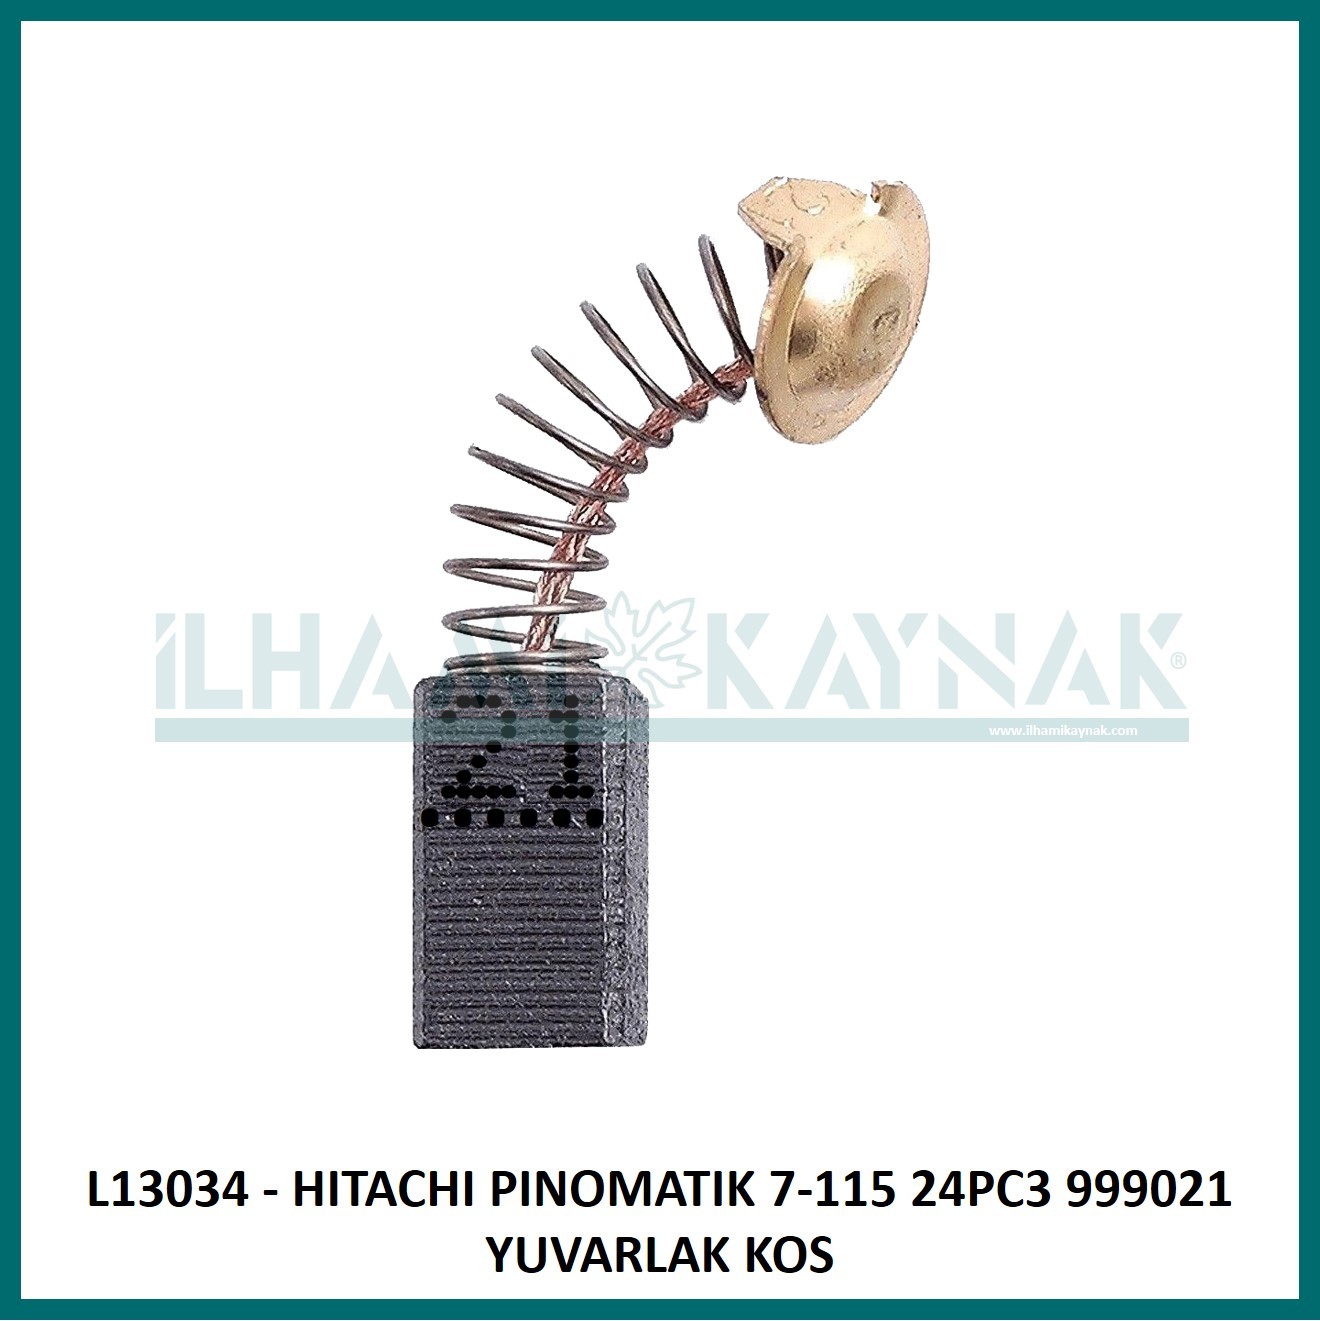 L13034 - HITACHI PINOMATIK 7-115 24PC3 999021 YUVARLAK KOS - 6,5*7,5*13 mm - 100 Adet